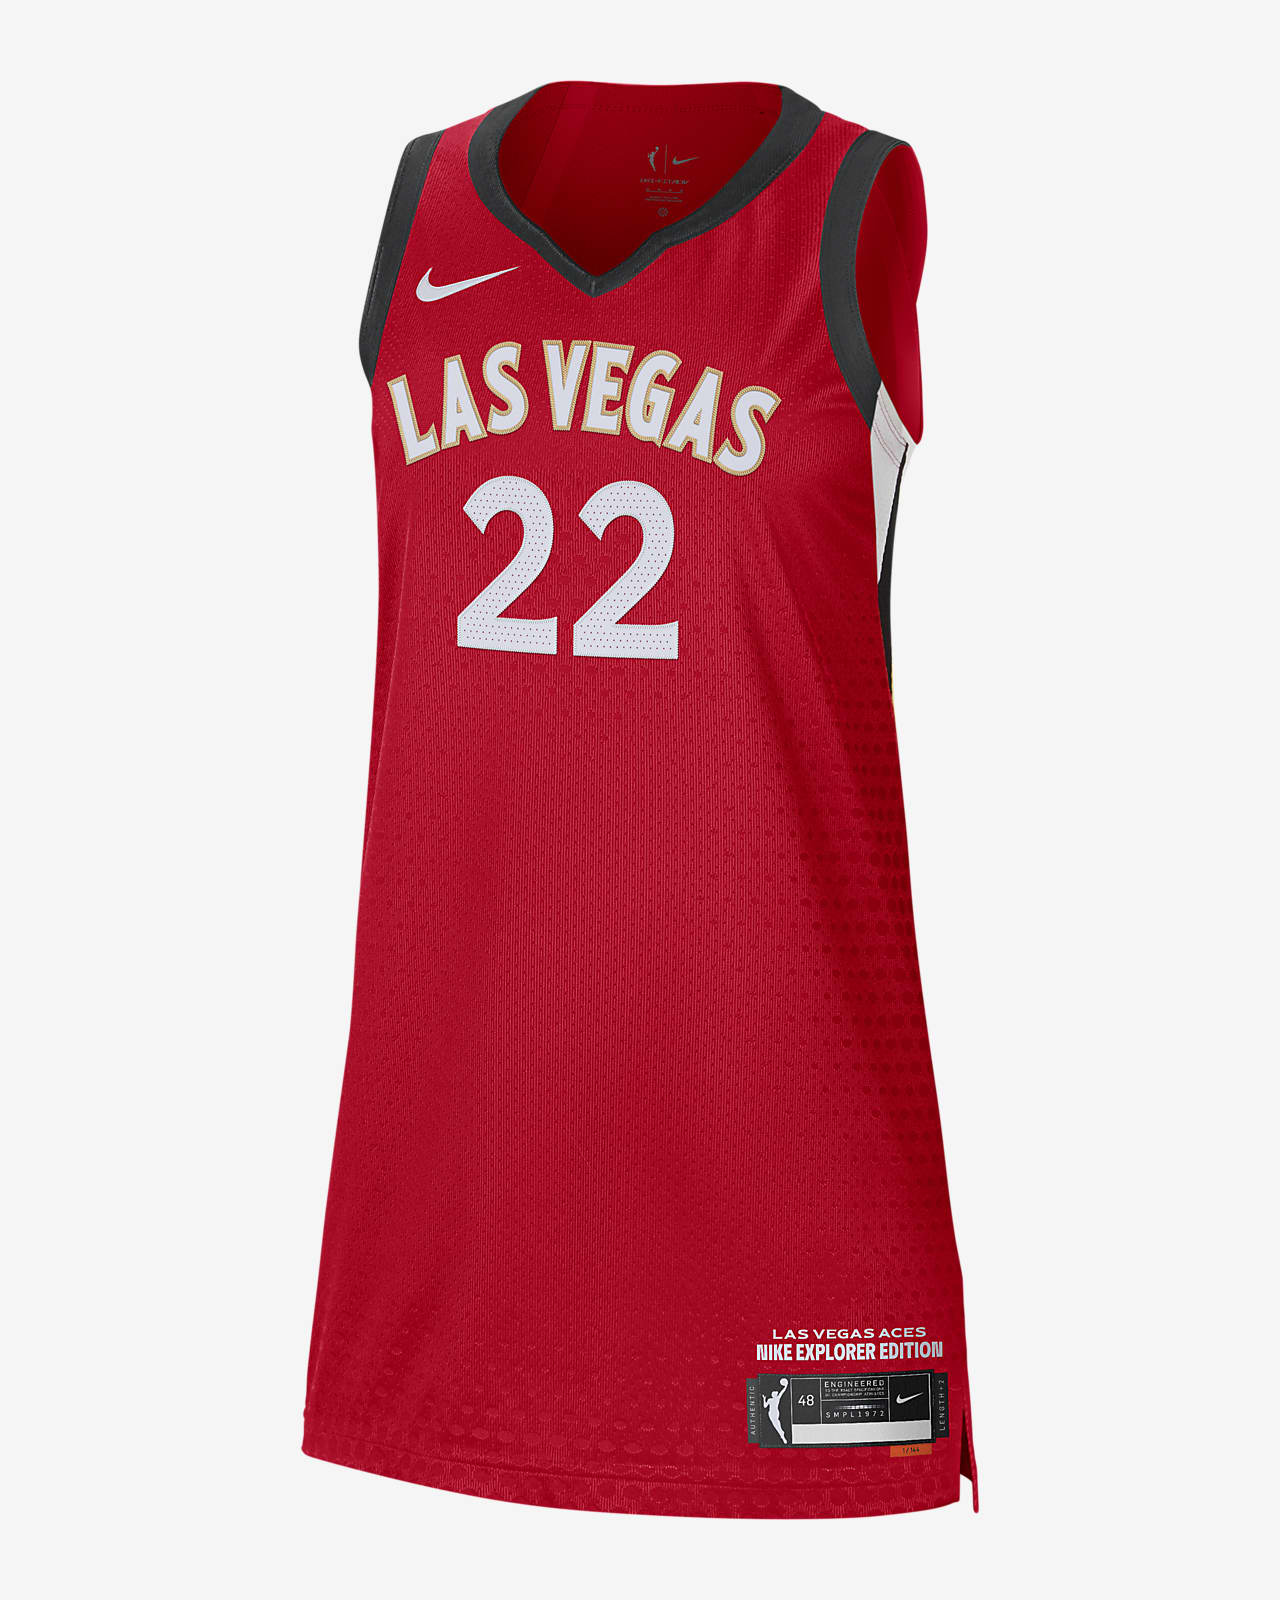 Camiseta Nike Dri-FIT ADV WNBA Authentic A'ja Wilson Aces Explorer Edition.  